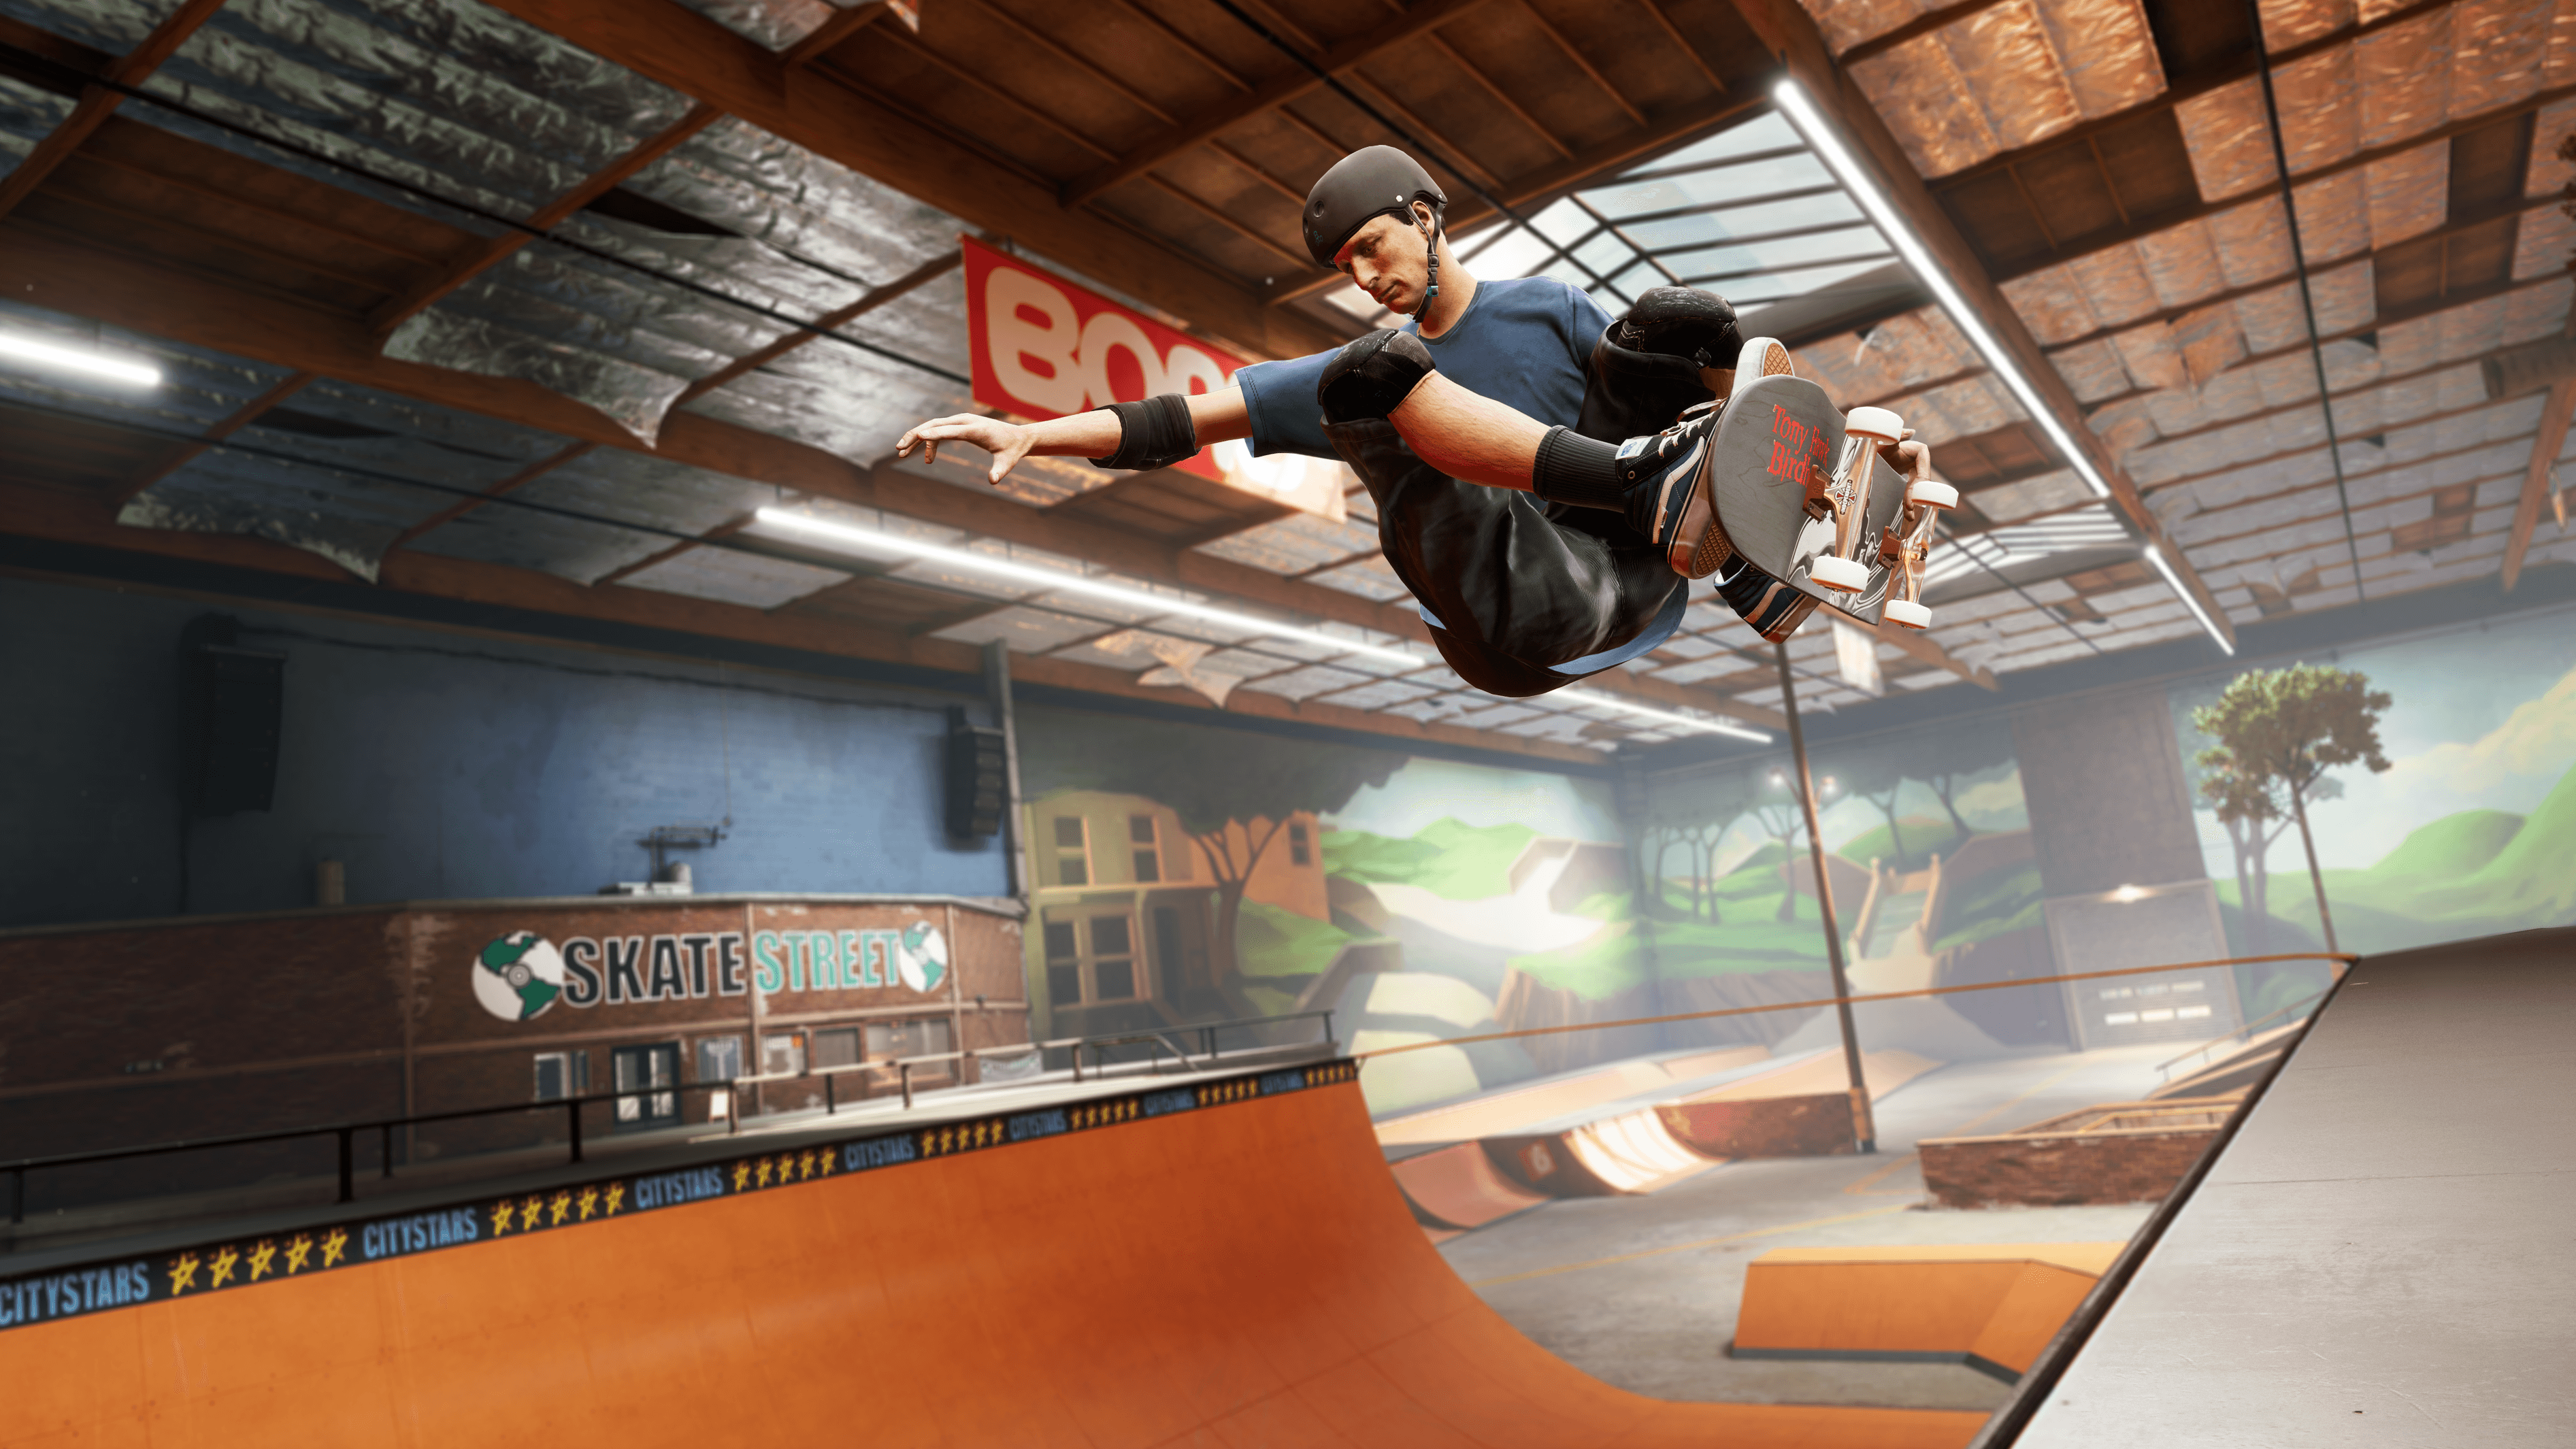 Tony Hawk shows his skills on a half-pipe in Tony Hawk Pro Skater 1 + 2 (2020), Activision